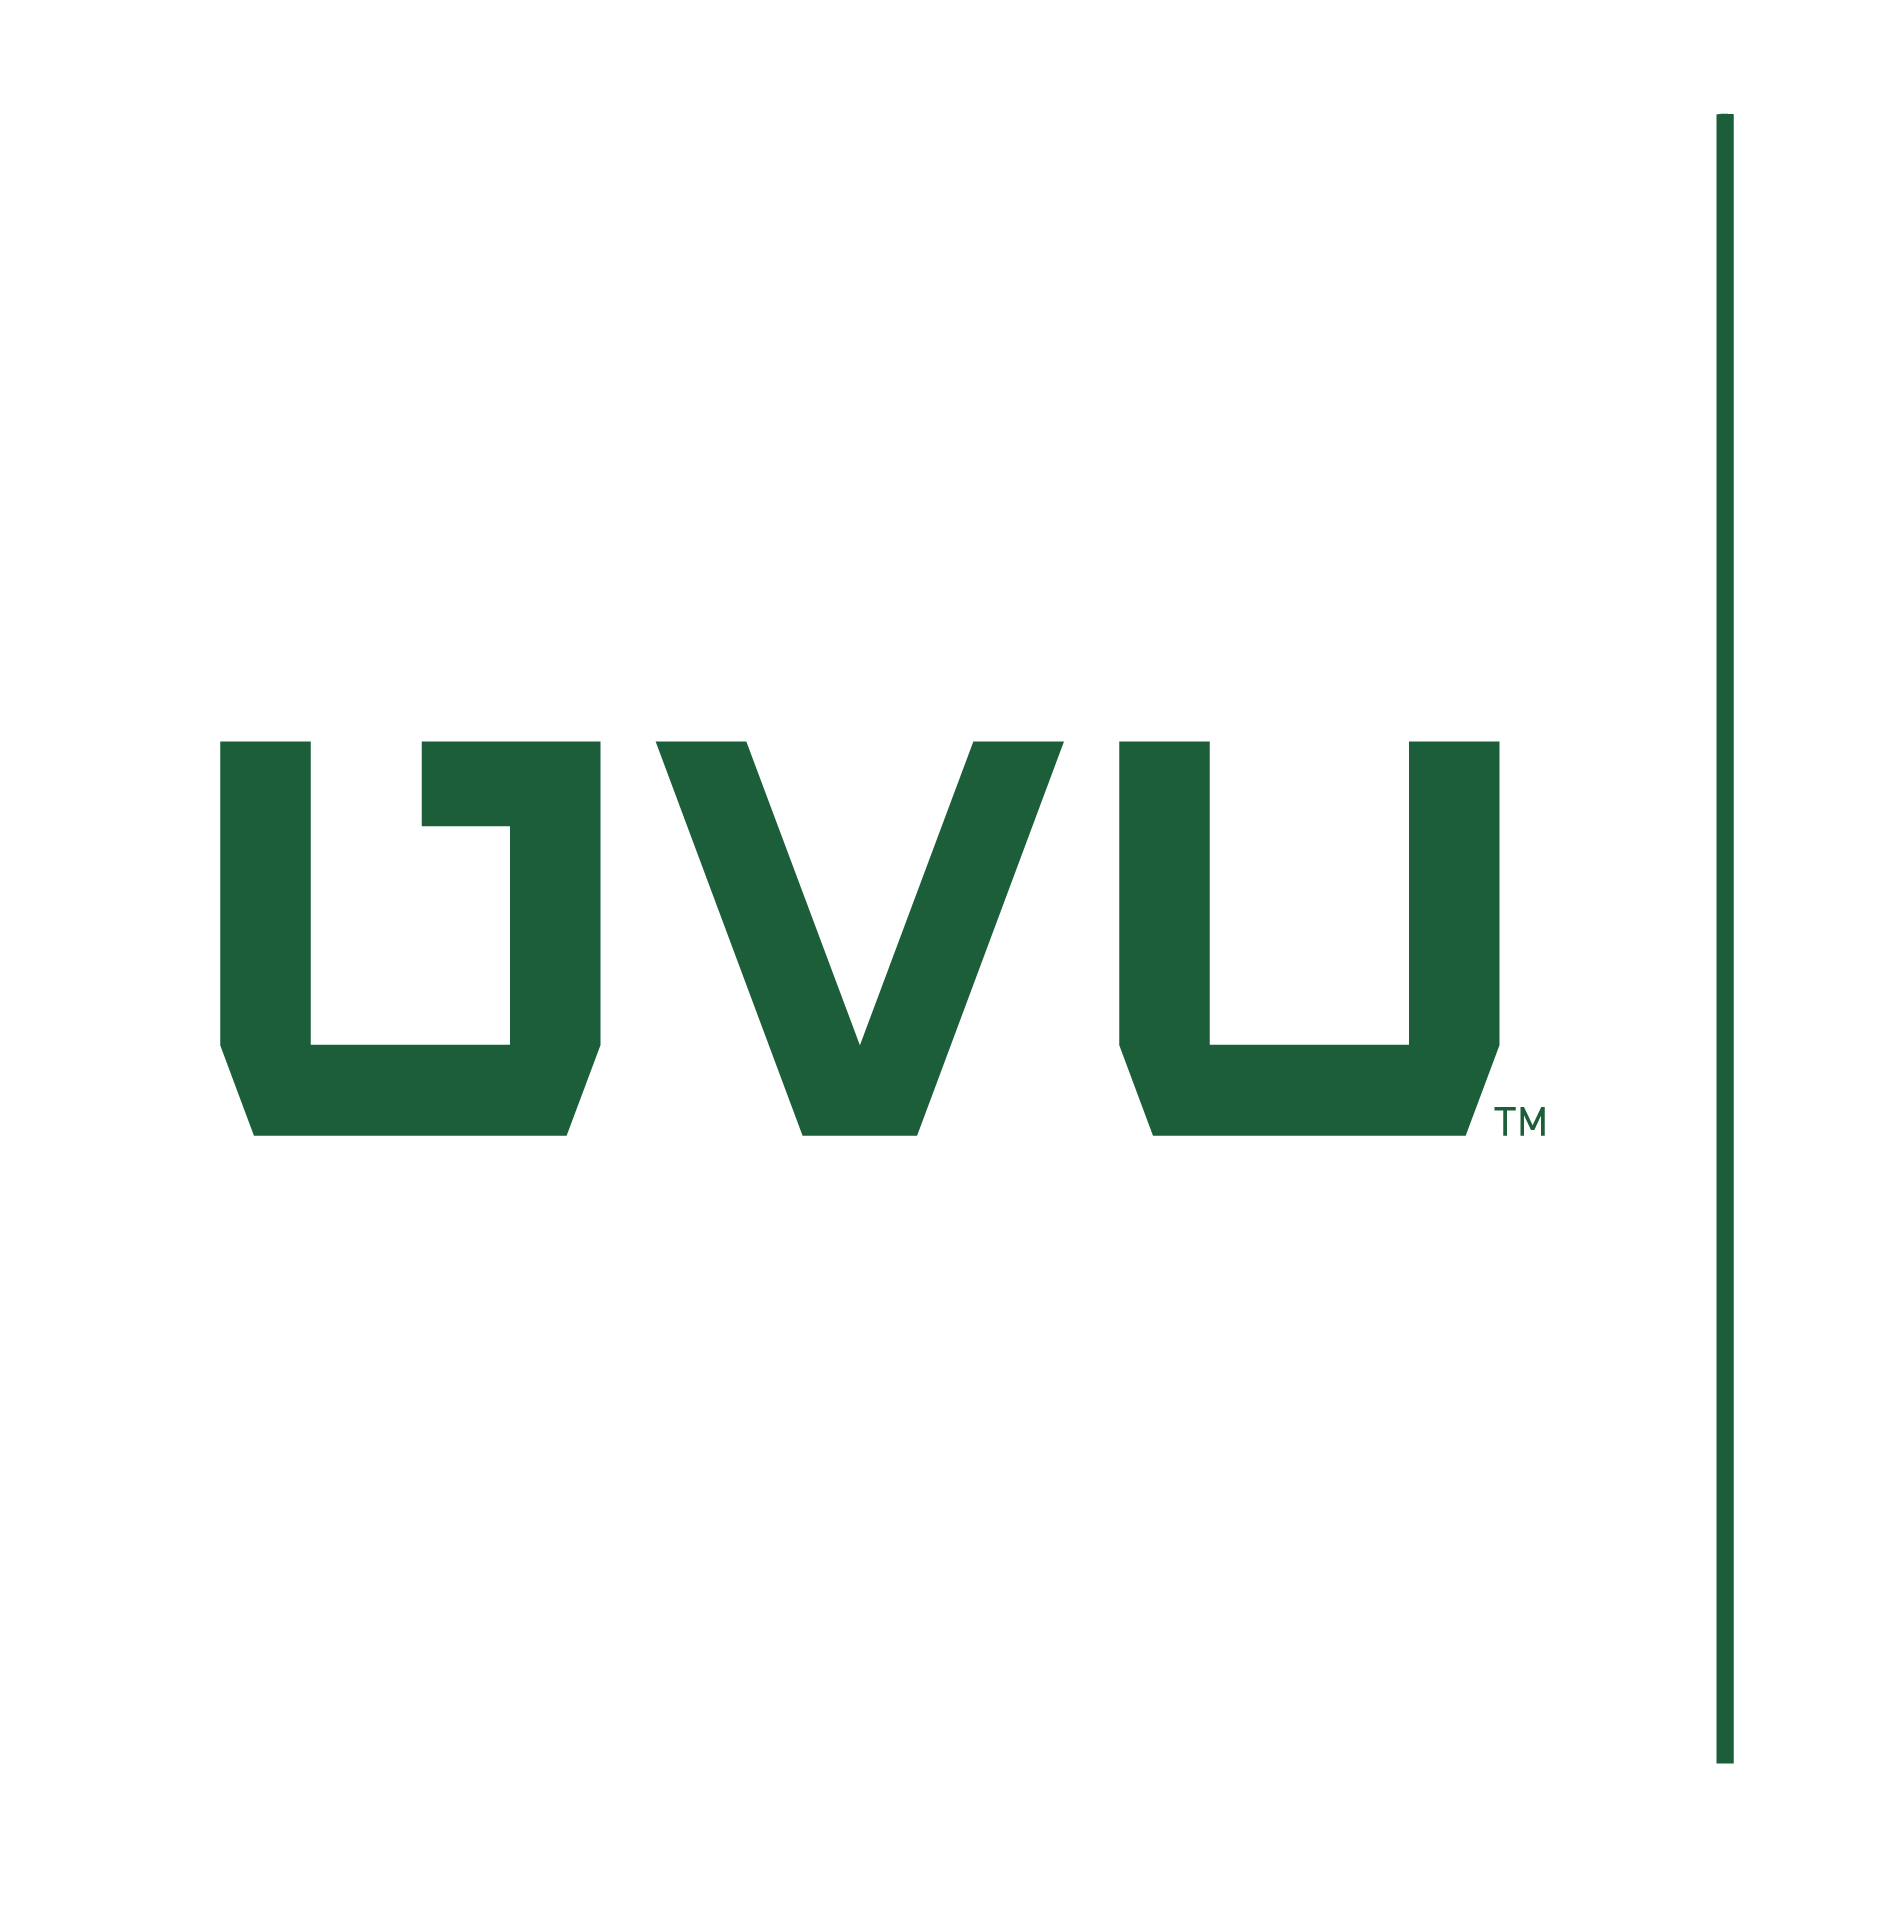 UVU mono email mark